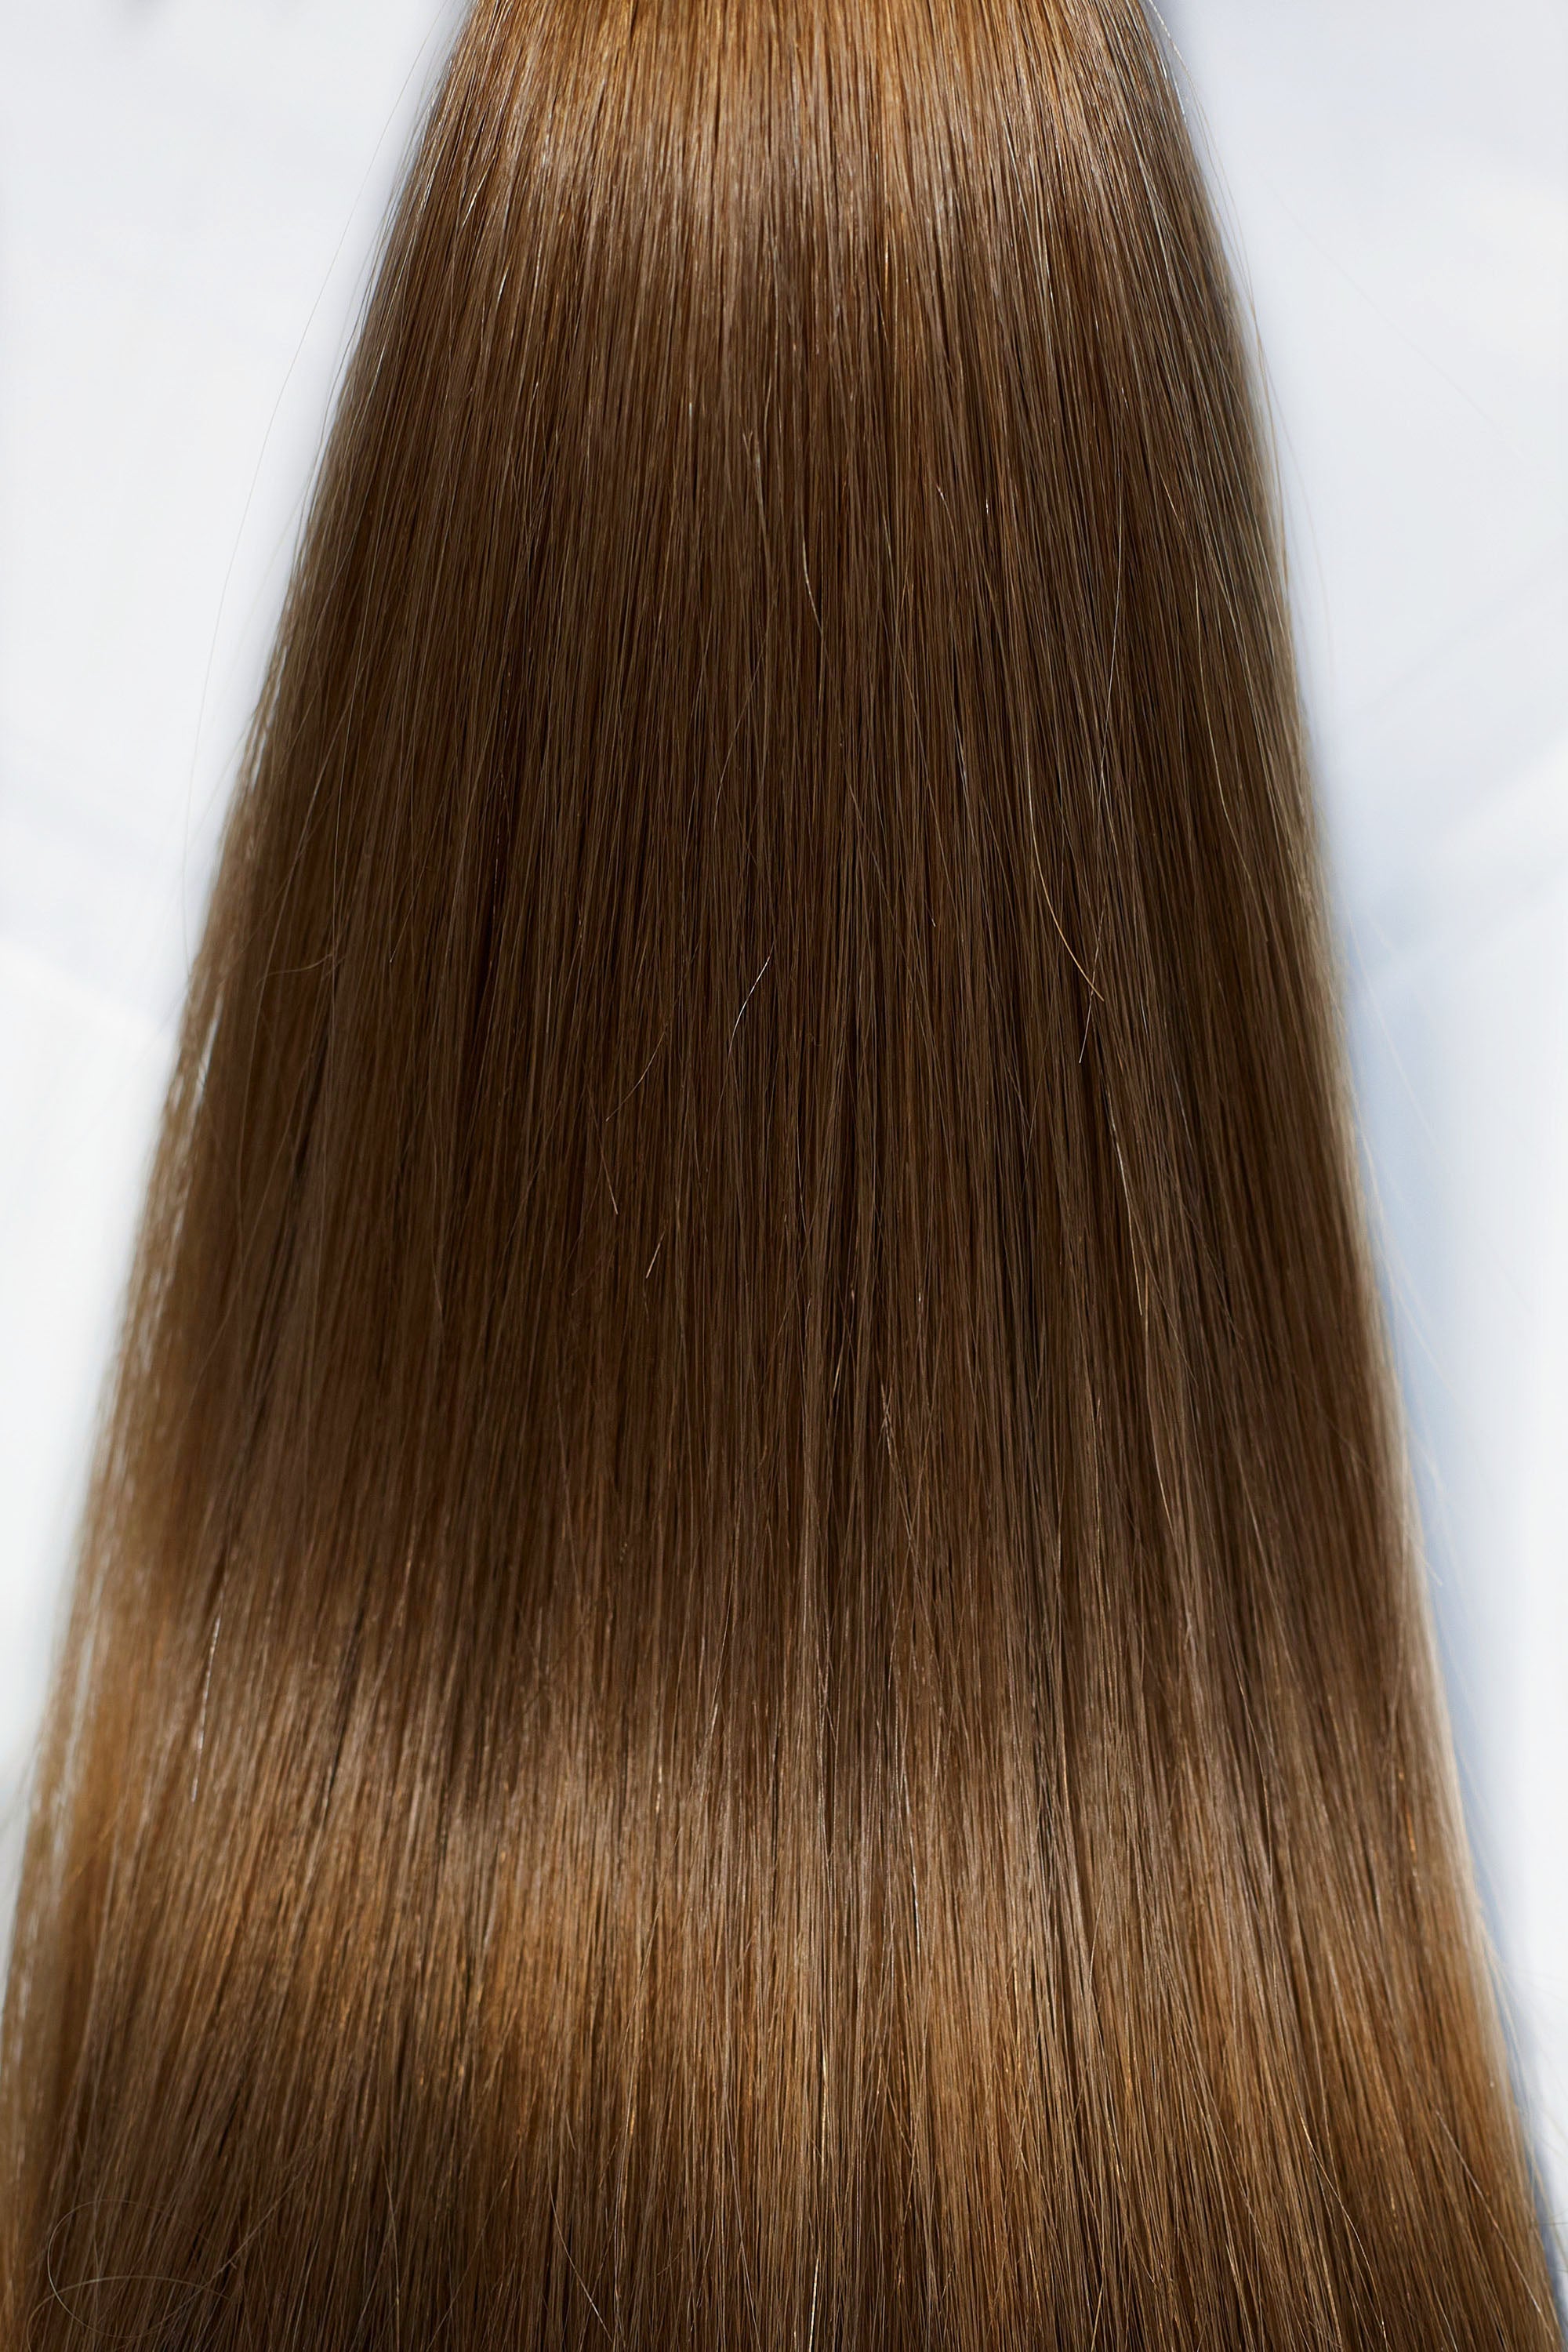 Behair professional Keratin Tip "Premium" 28" (70cm) Natural Straight Chestnut #6 - 25g (Micro - 0.5g each pcs) hair extensions